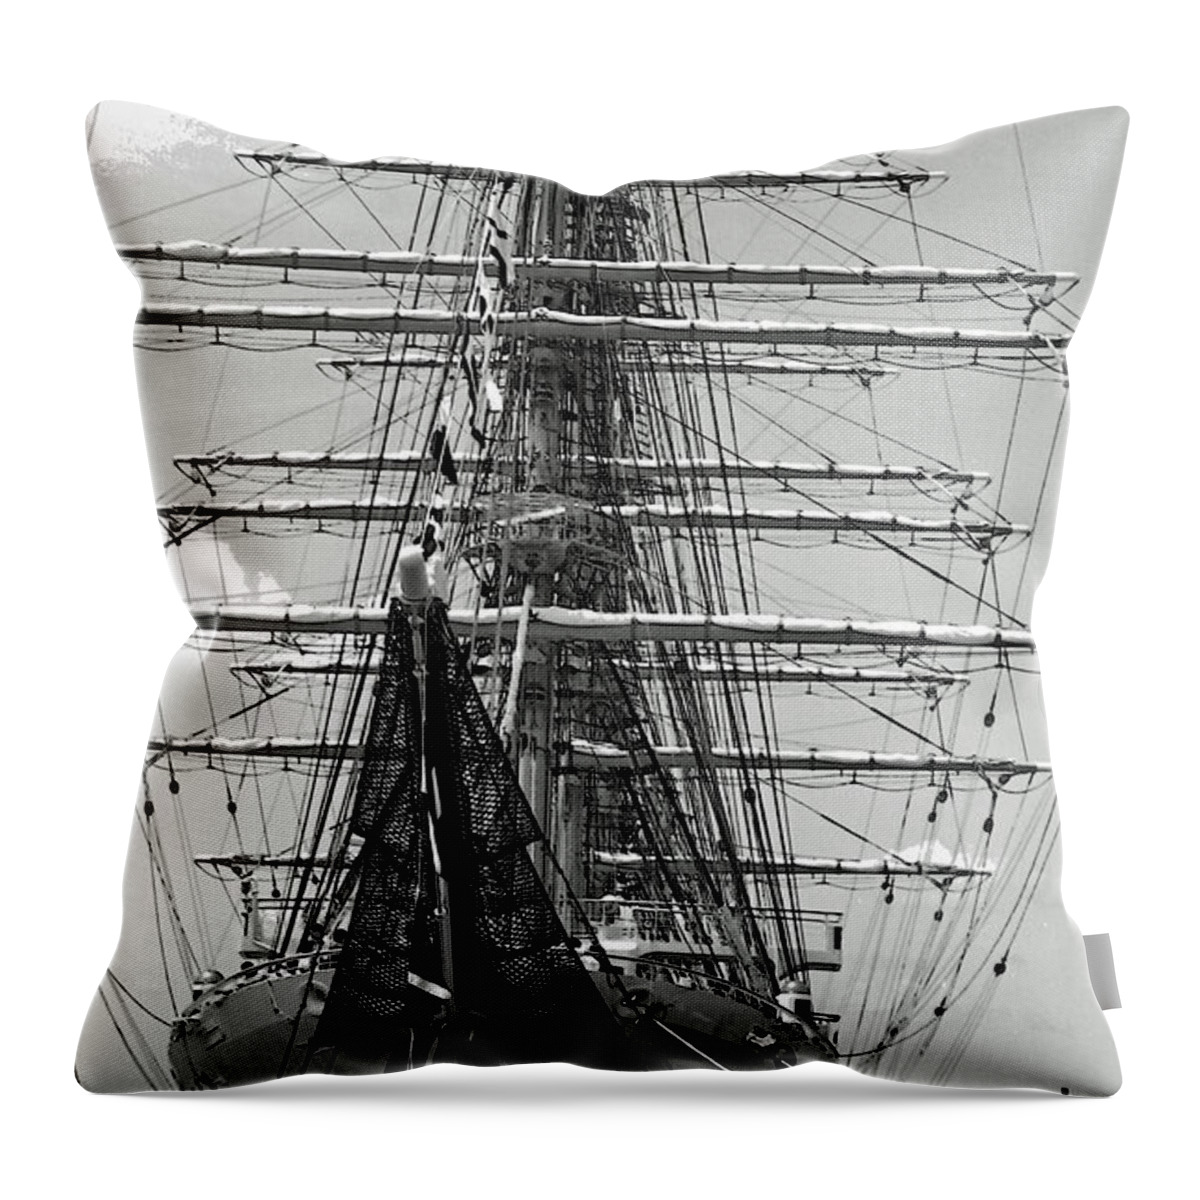 Sailing Ships Throw Pillow featuring the photograph Kaiwo Maru by John Schneider